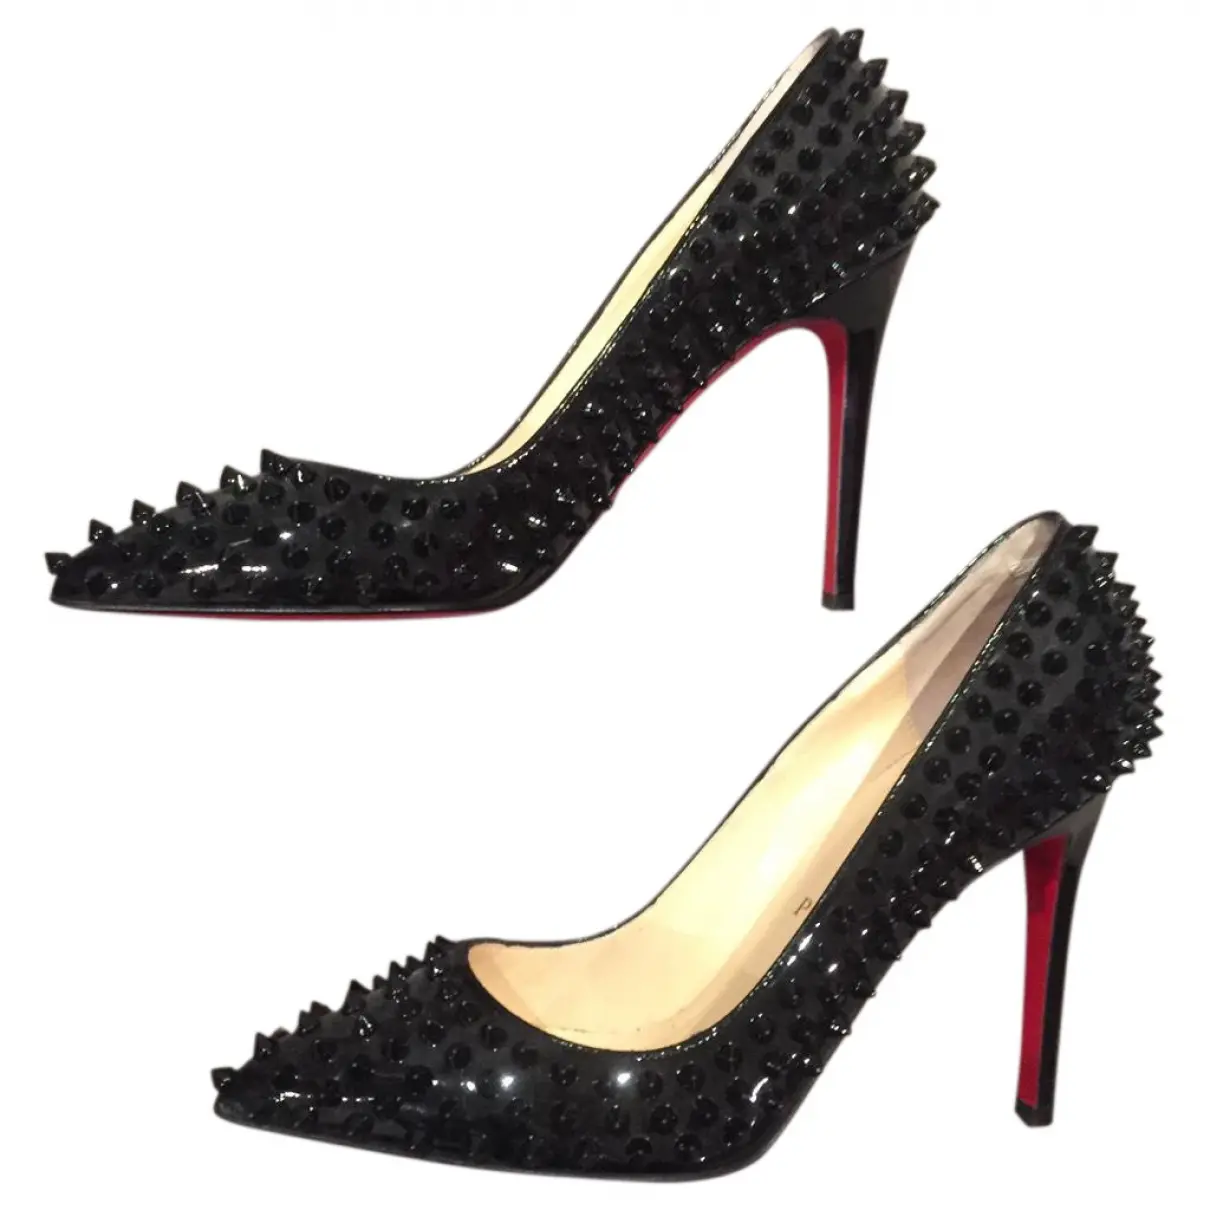 Black spiked heels Christian Louboutin